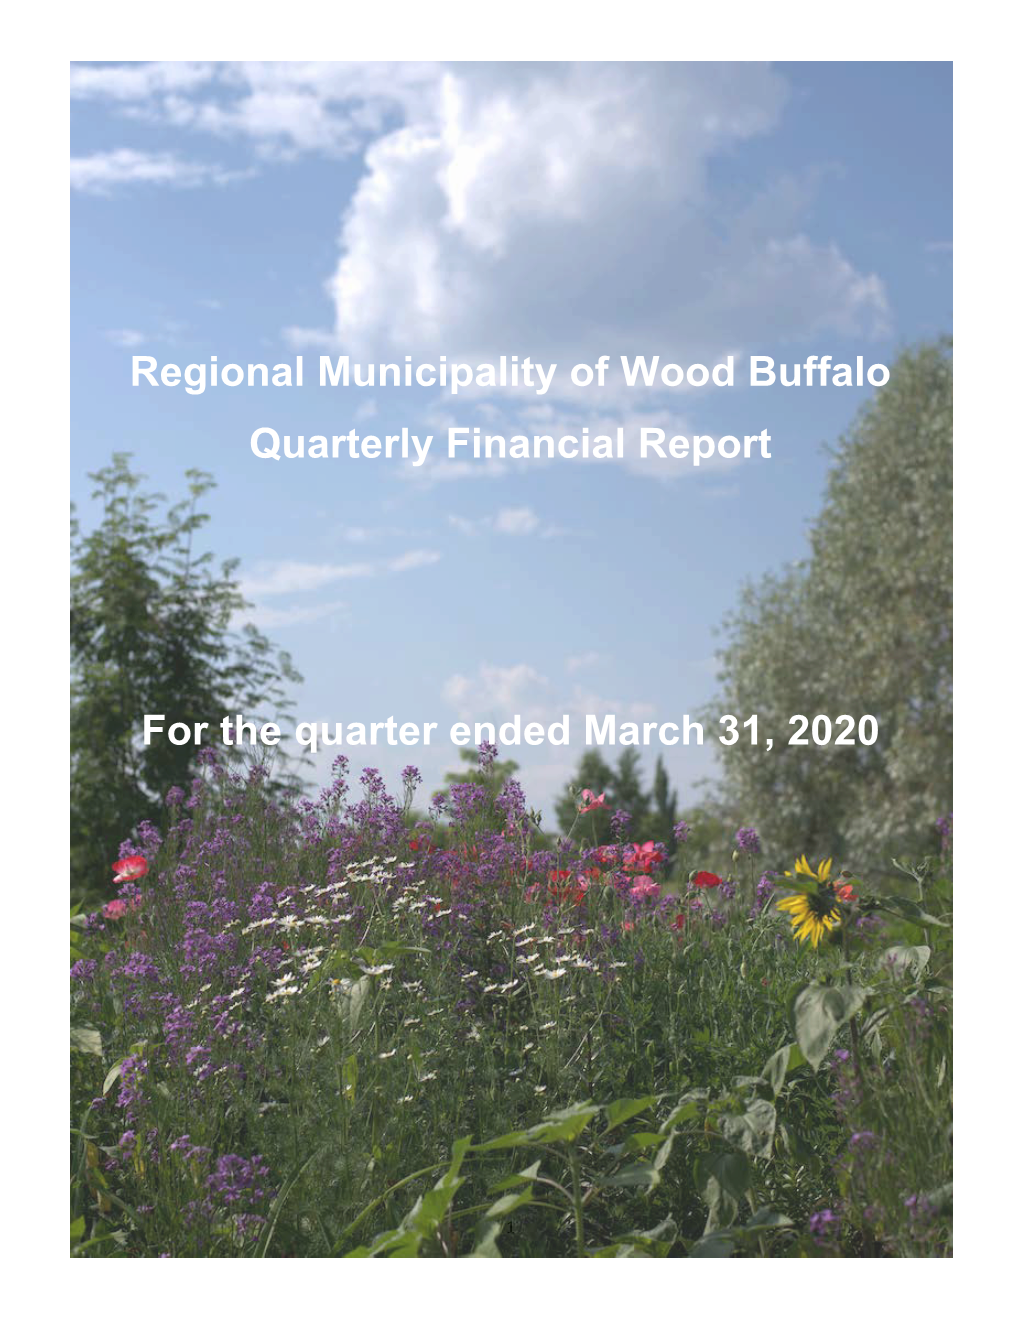 Regional Municipality of Wood Buffalo Quarterly Financial Report for The